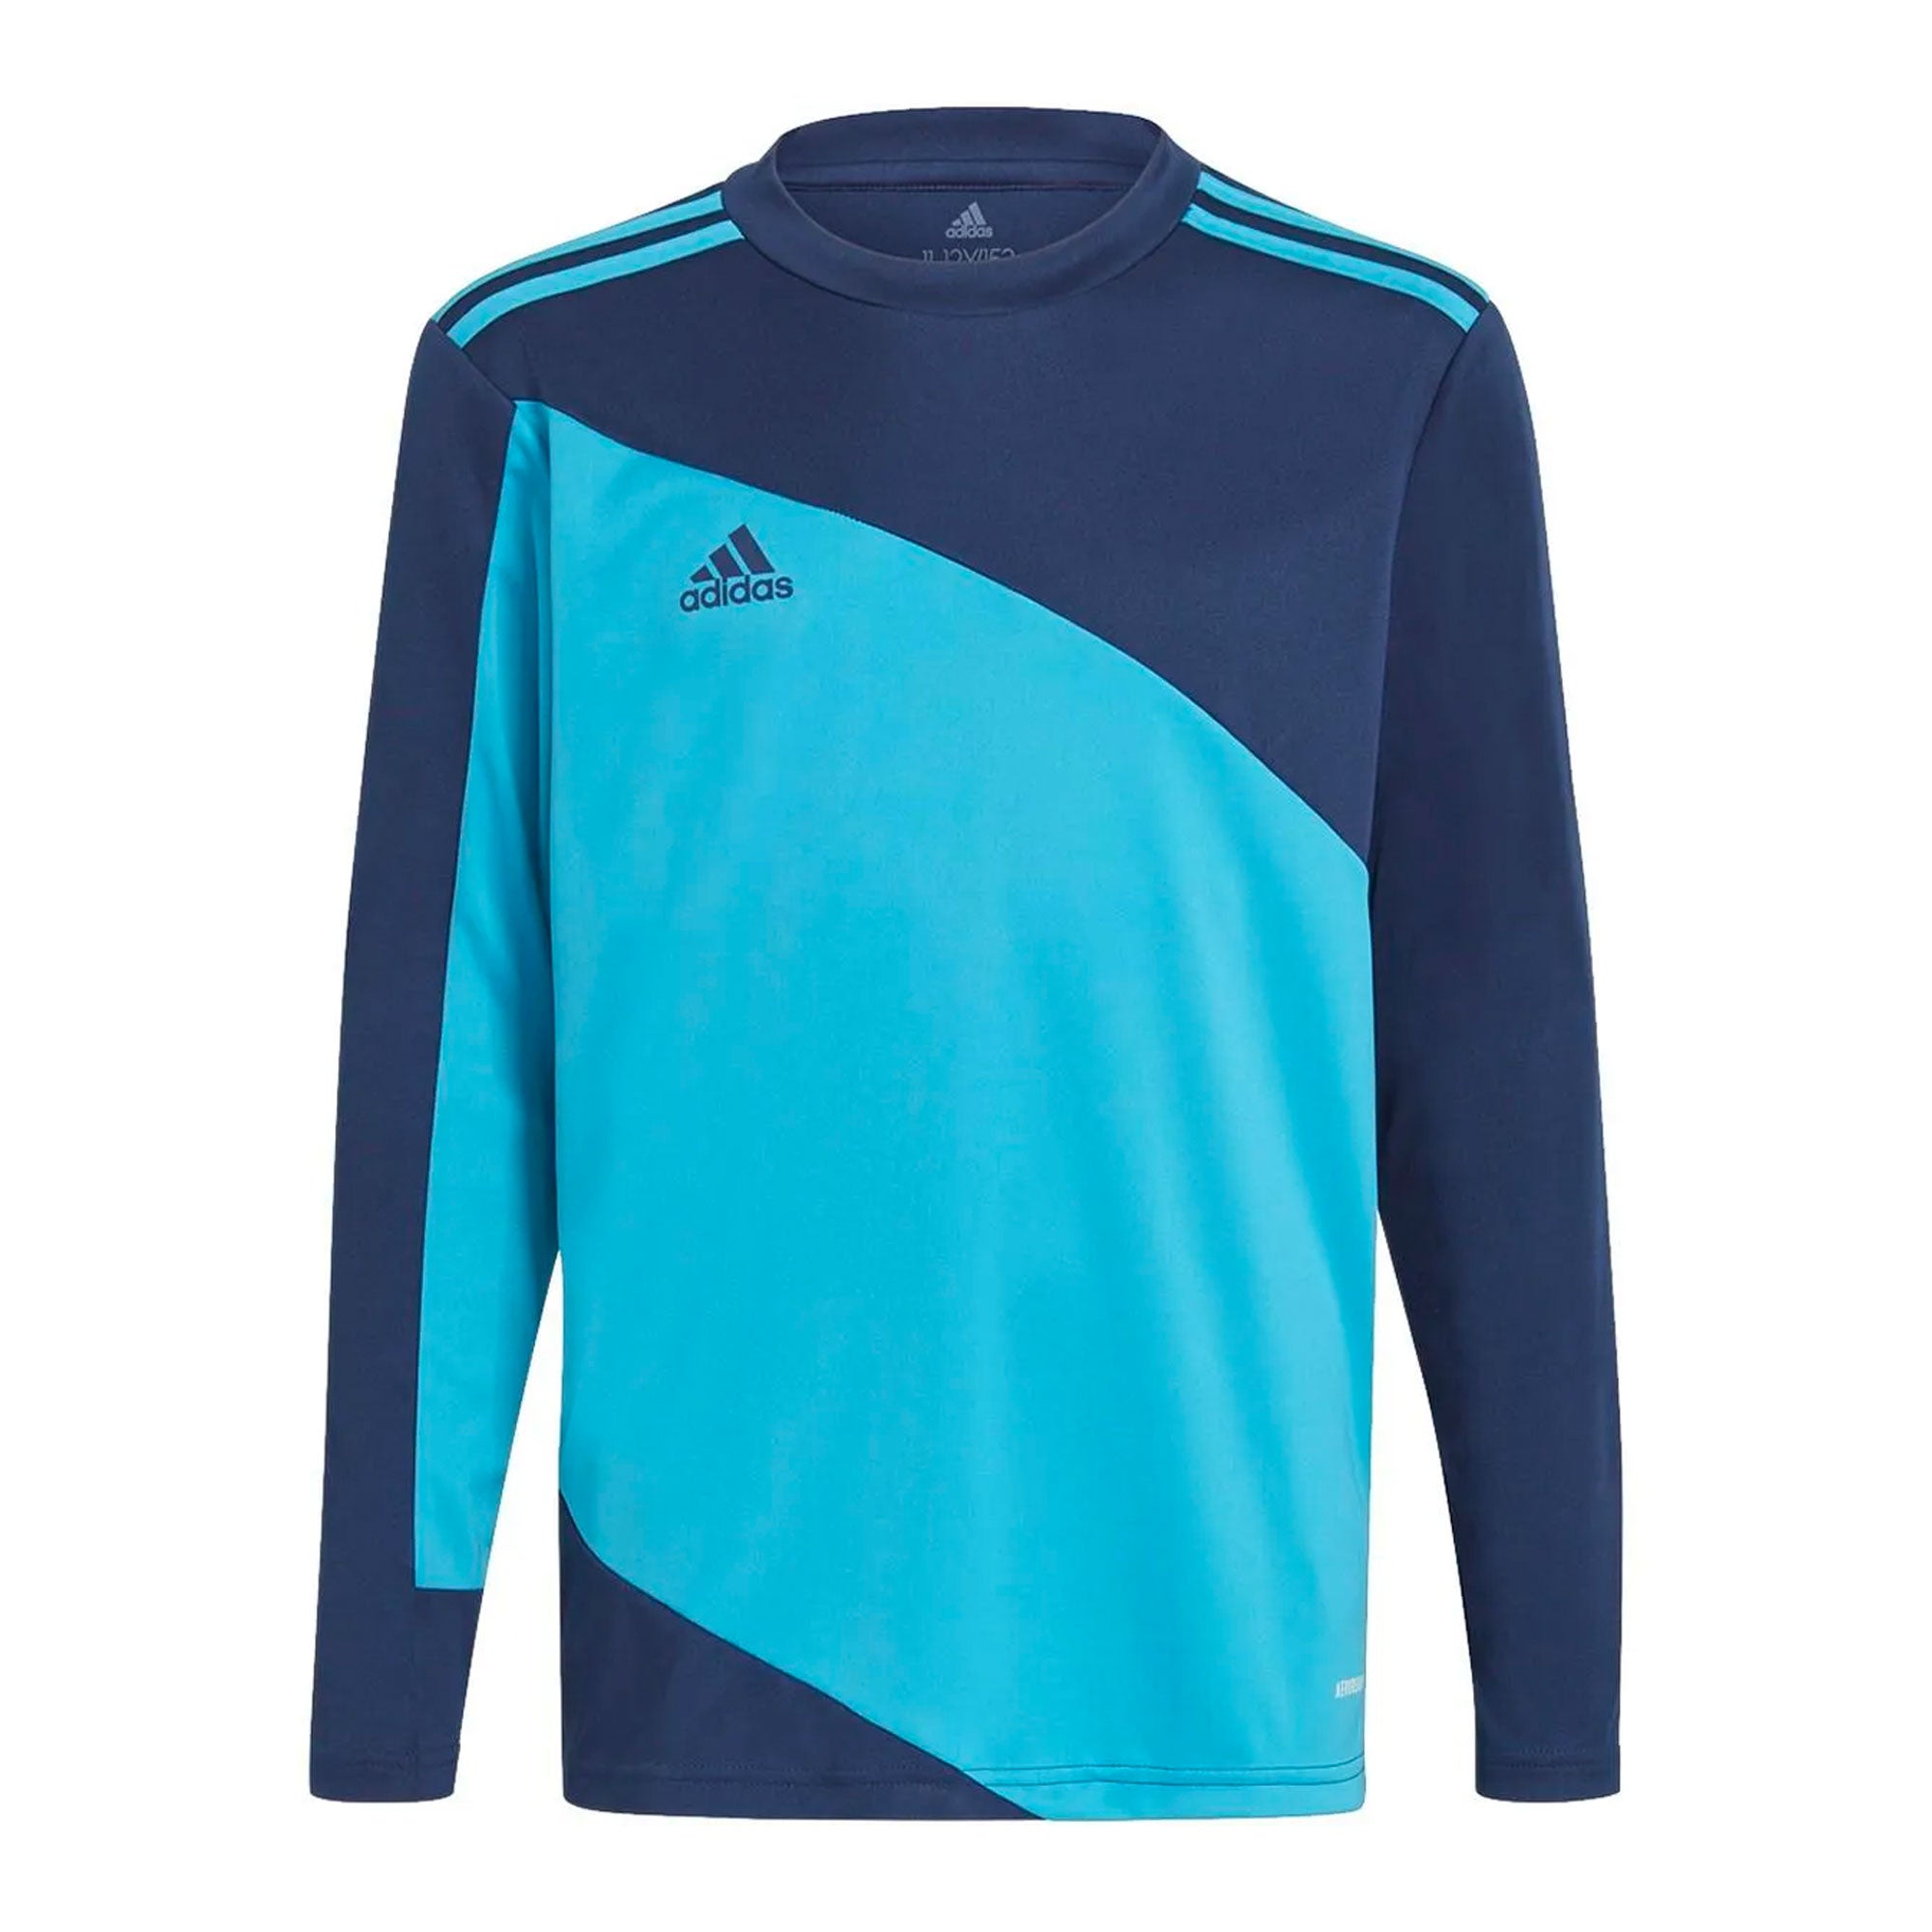 Adidas Squadra 21 Goalkeeper Jersey - blue/navy XL, Men's